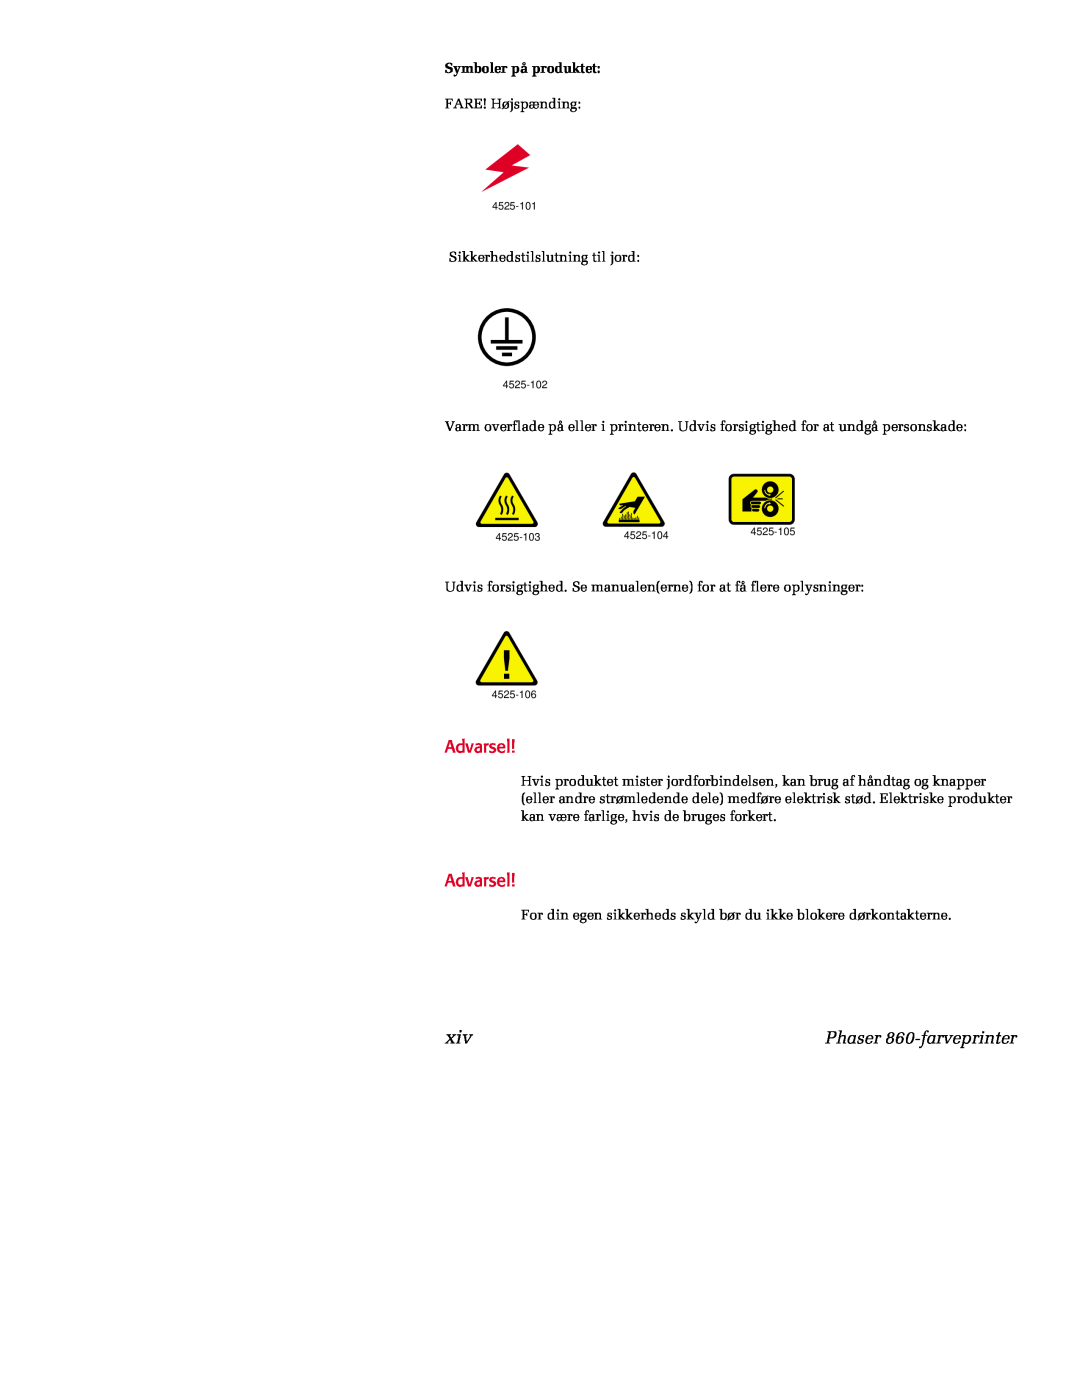 Tektronix manual Advarsel, Phaser 860-farveprinter, Symboler på produktet 